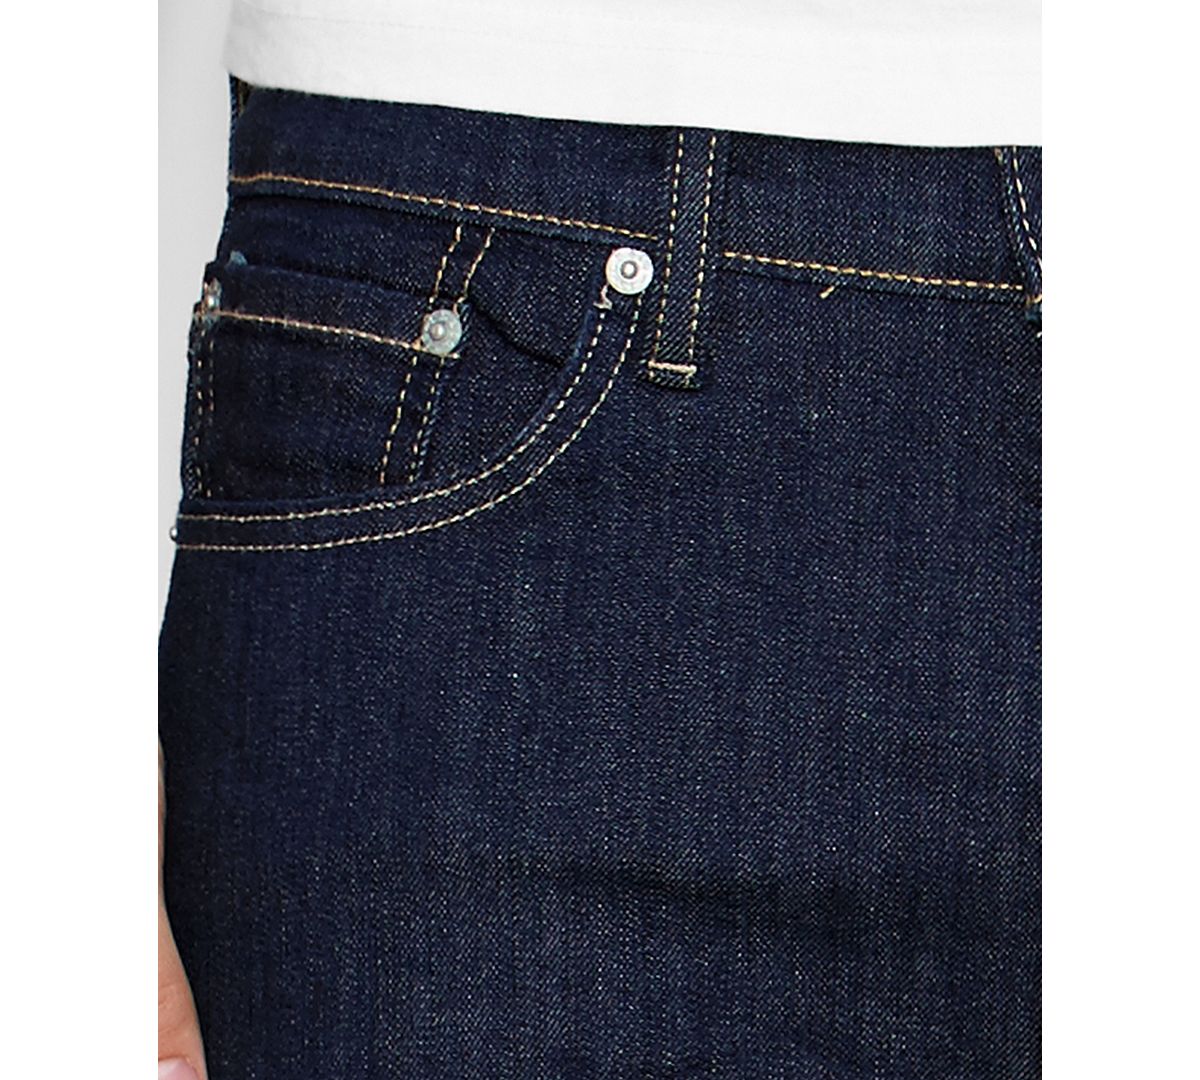 Levi's 513™ Slim Straight Fit Jeans Bastion